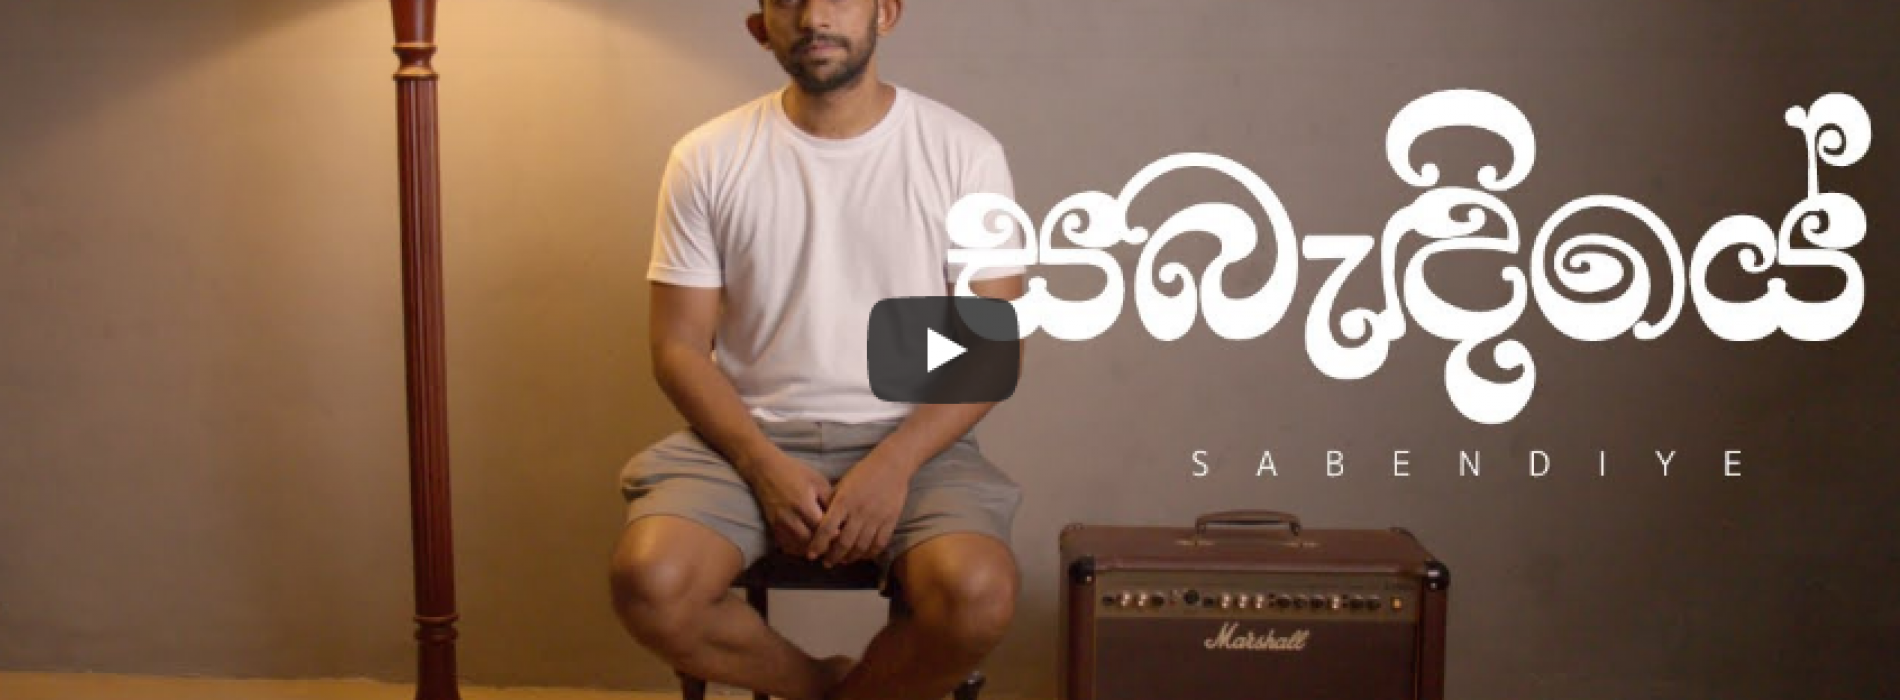 New Music : Mirantha – Sabendiye (සබැඳියේ) [Music Video]